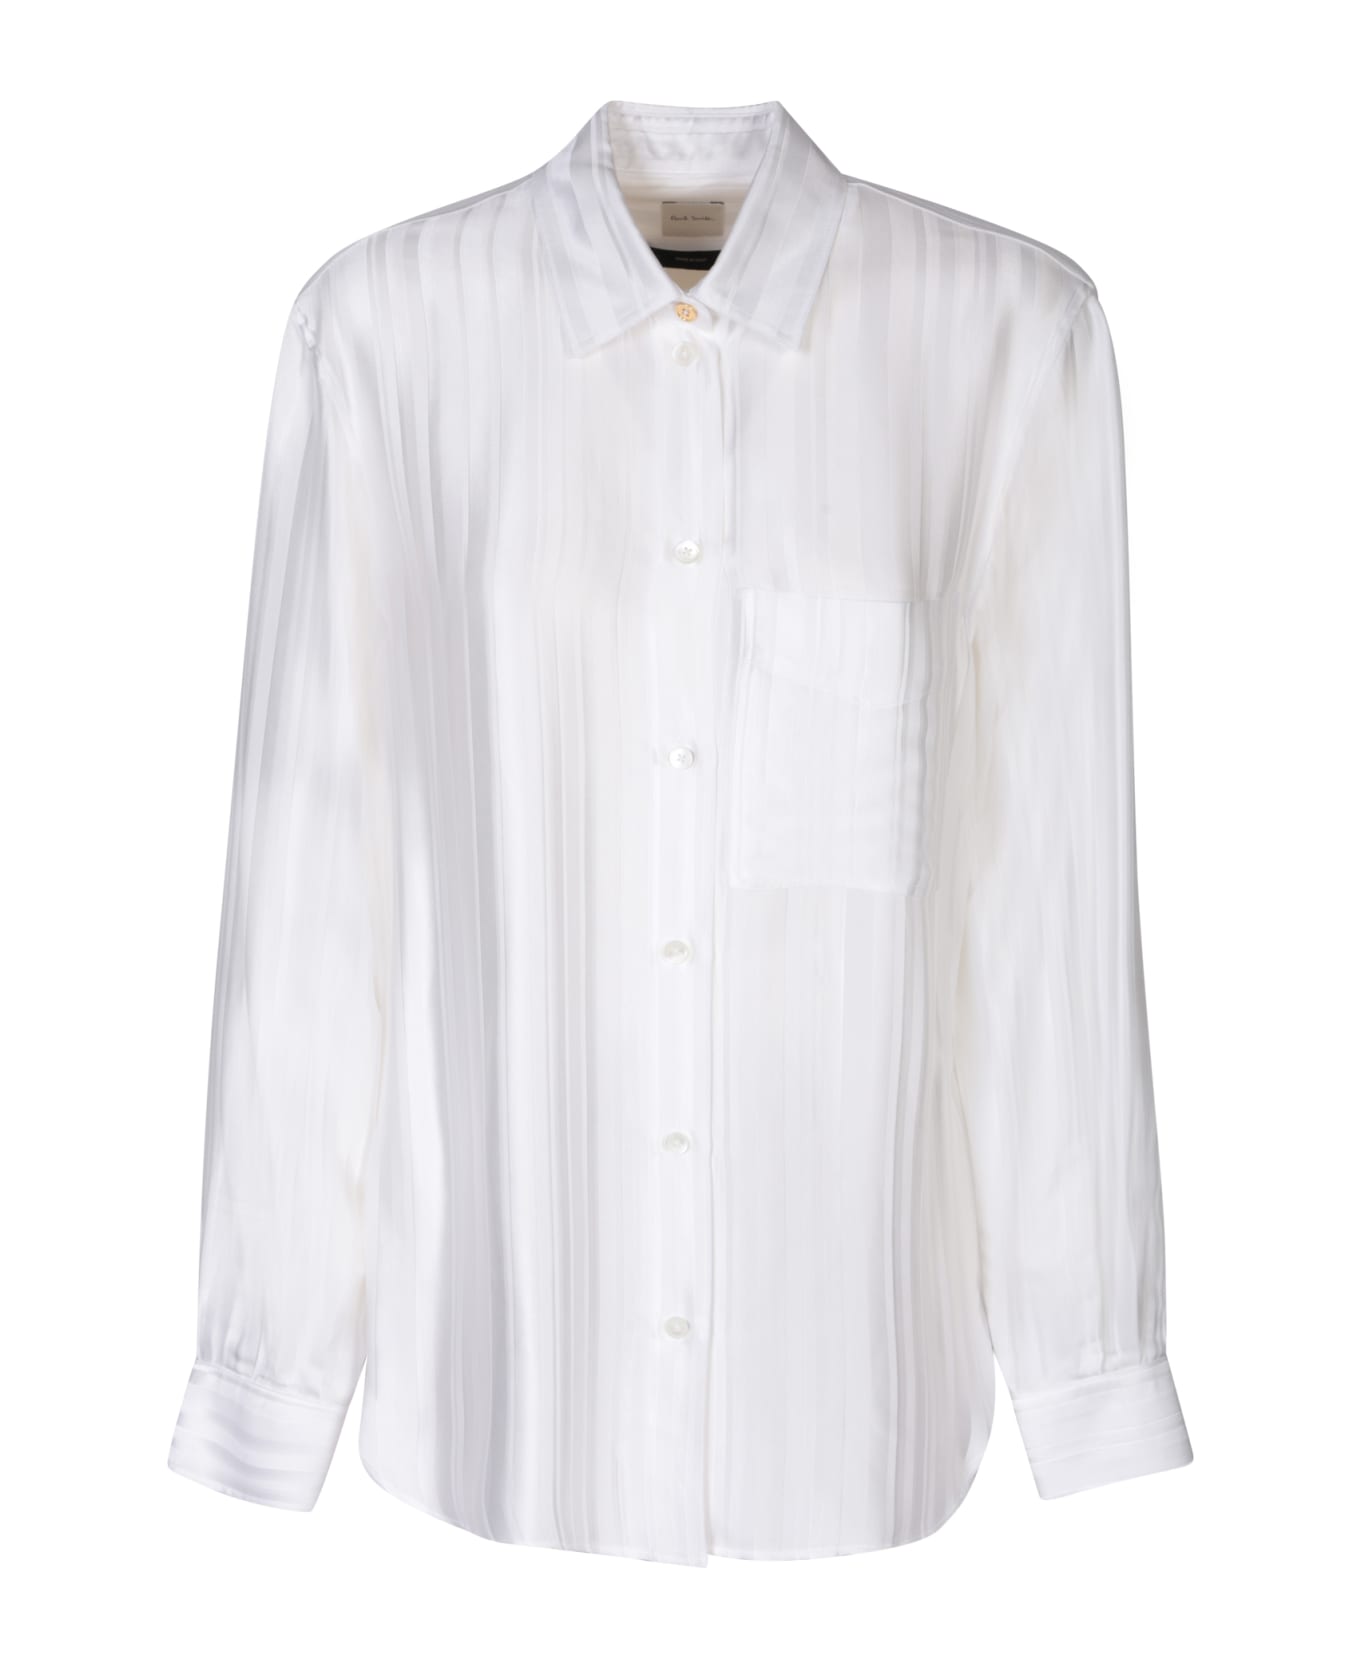 Paul Smith Striped Motif White Shirt - White